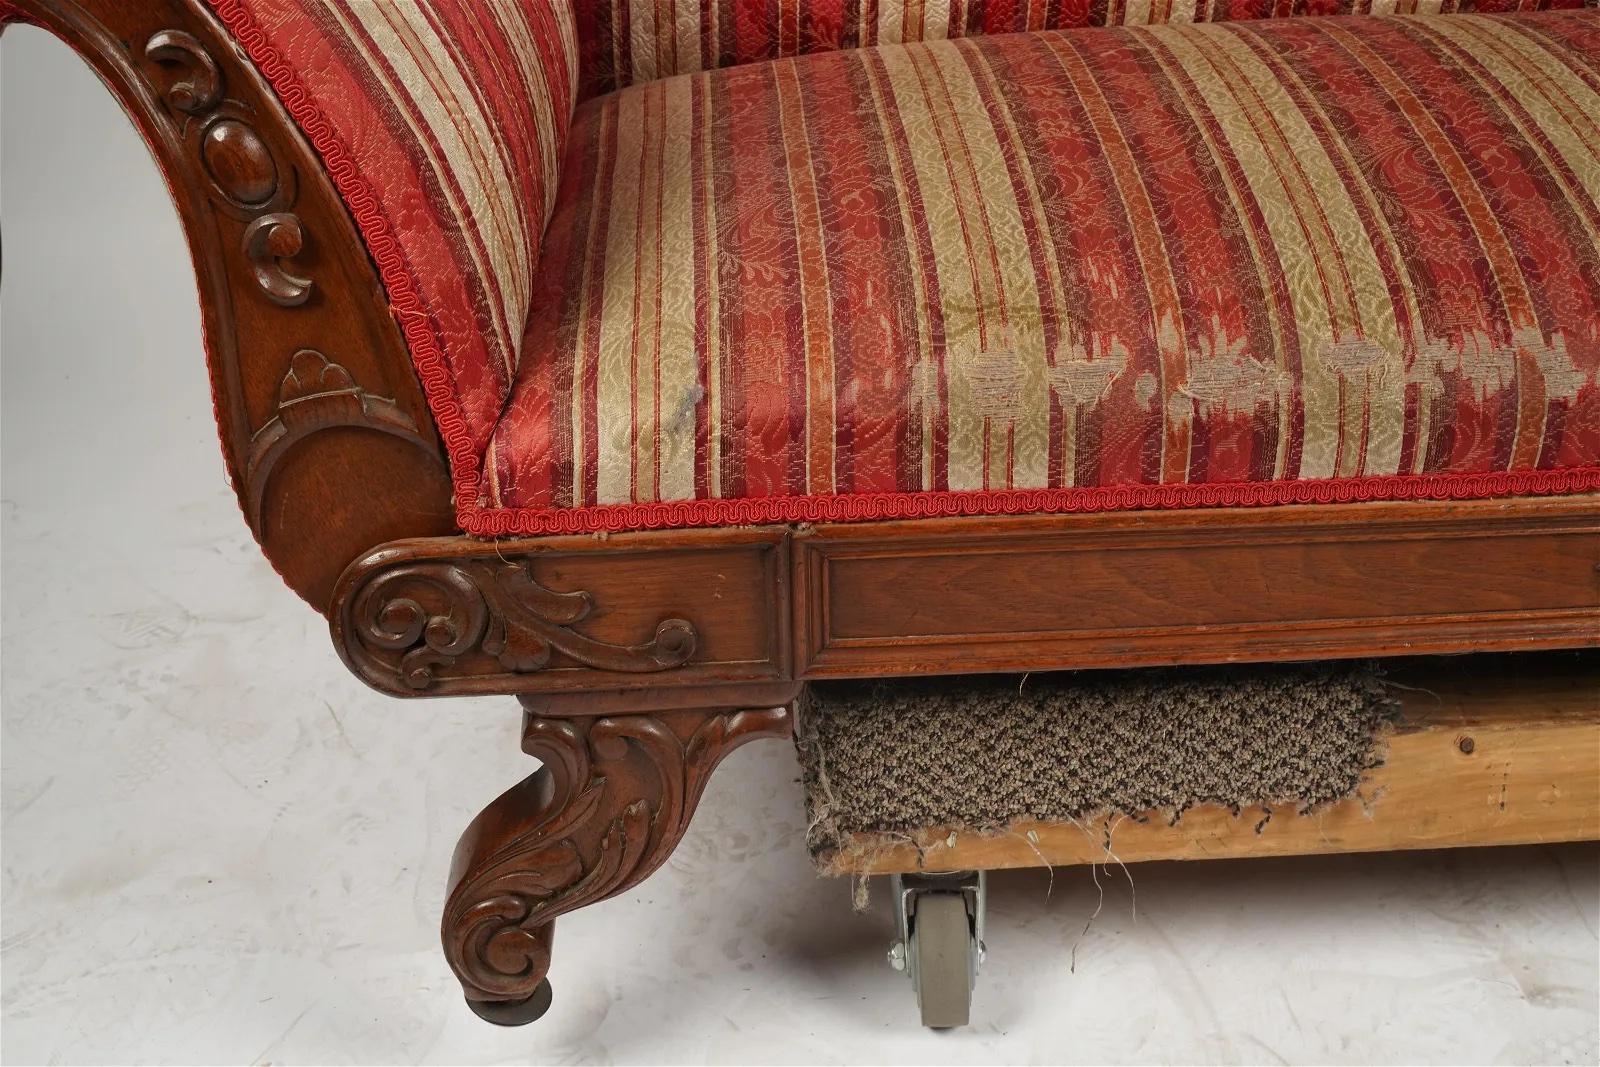 19th Century Period Antique American Victorian Rococo Revival Carved Walnut Sofa Circa 1850 For Sale